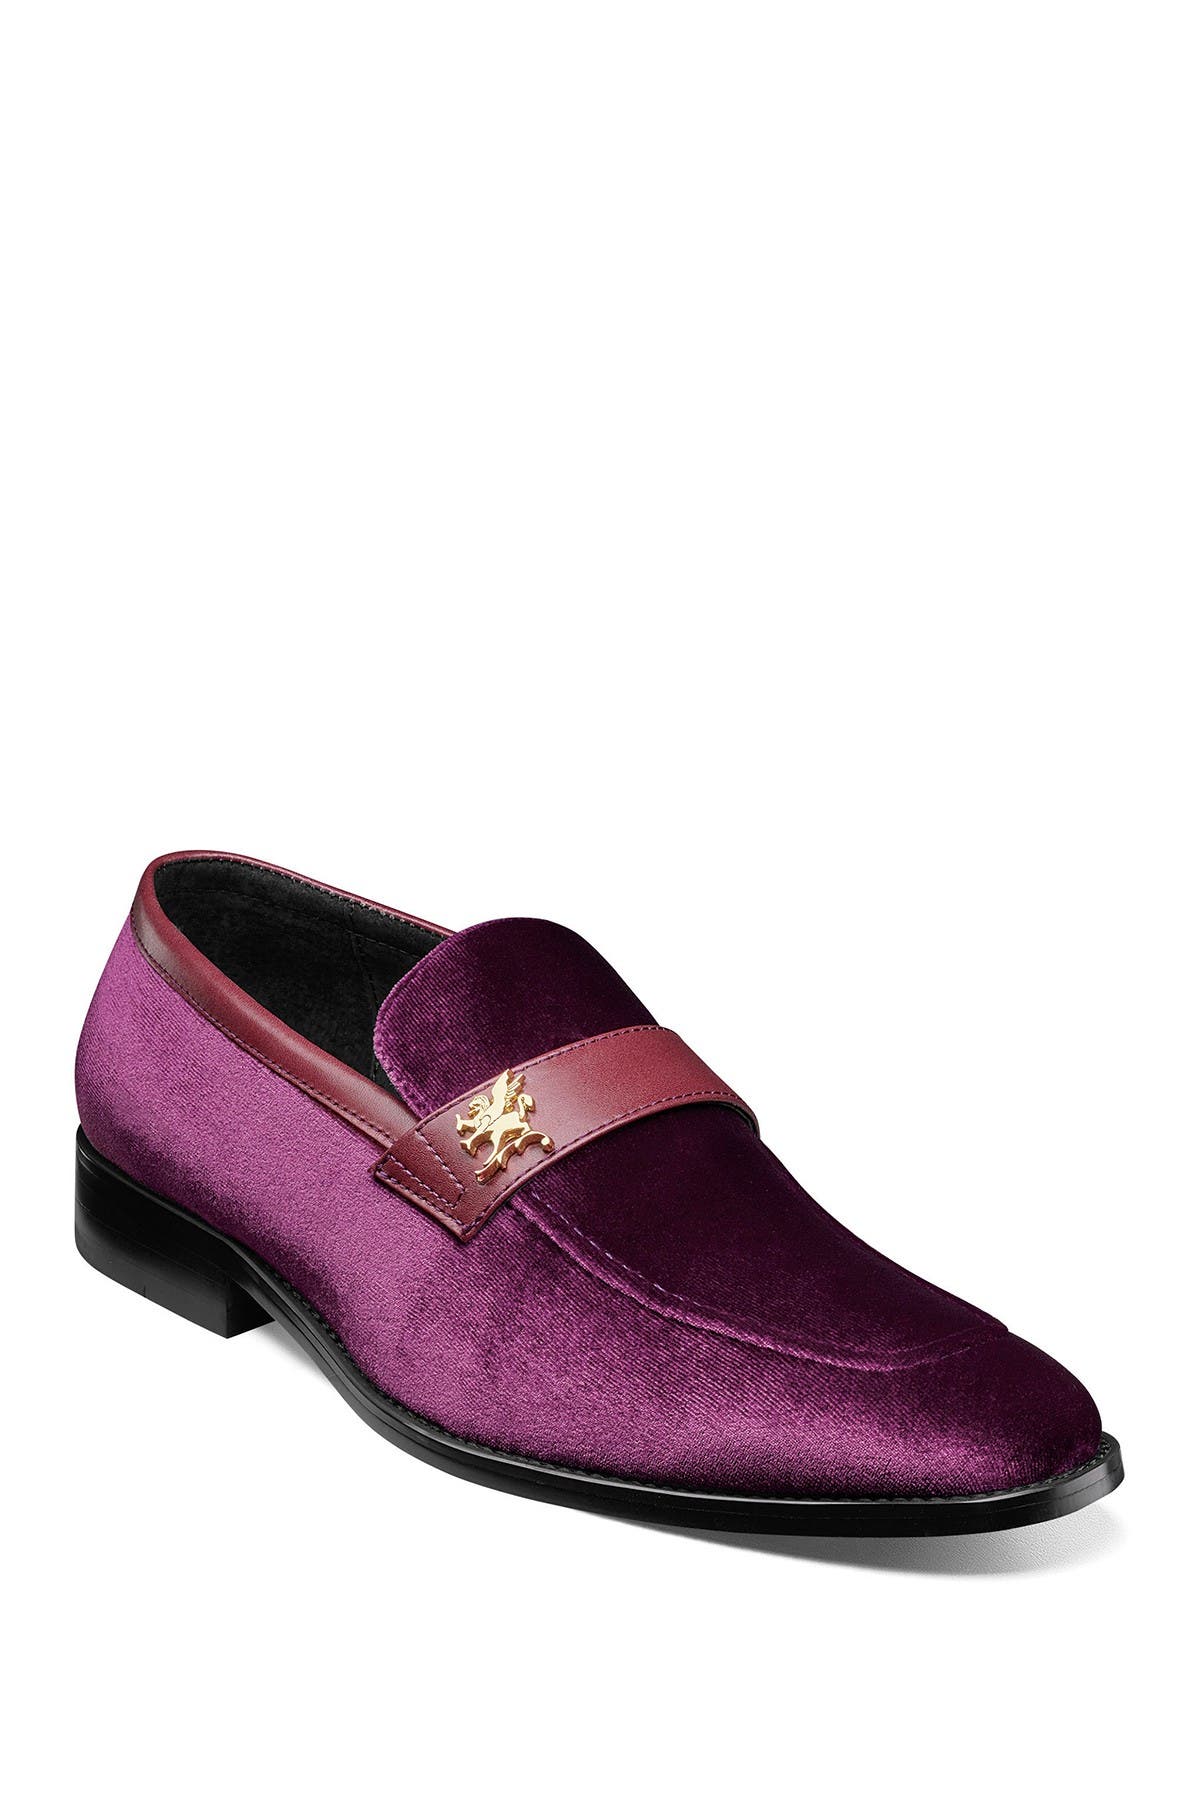 purple stacy adams shoes